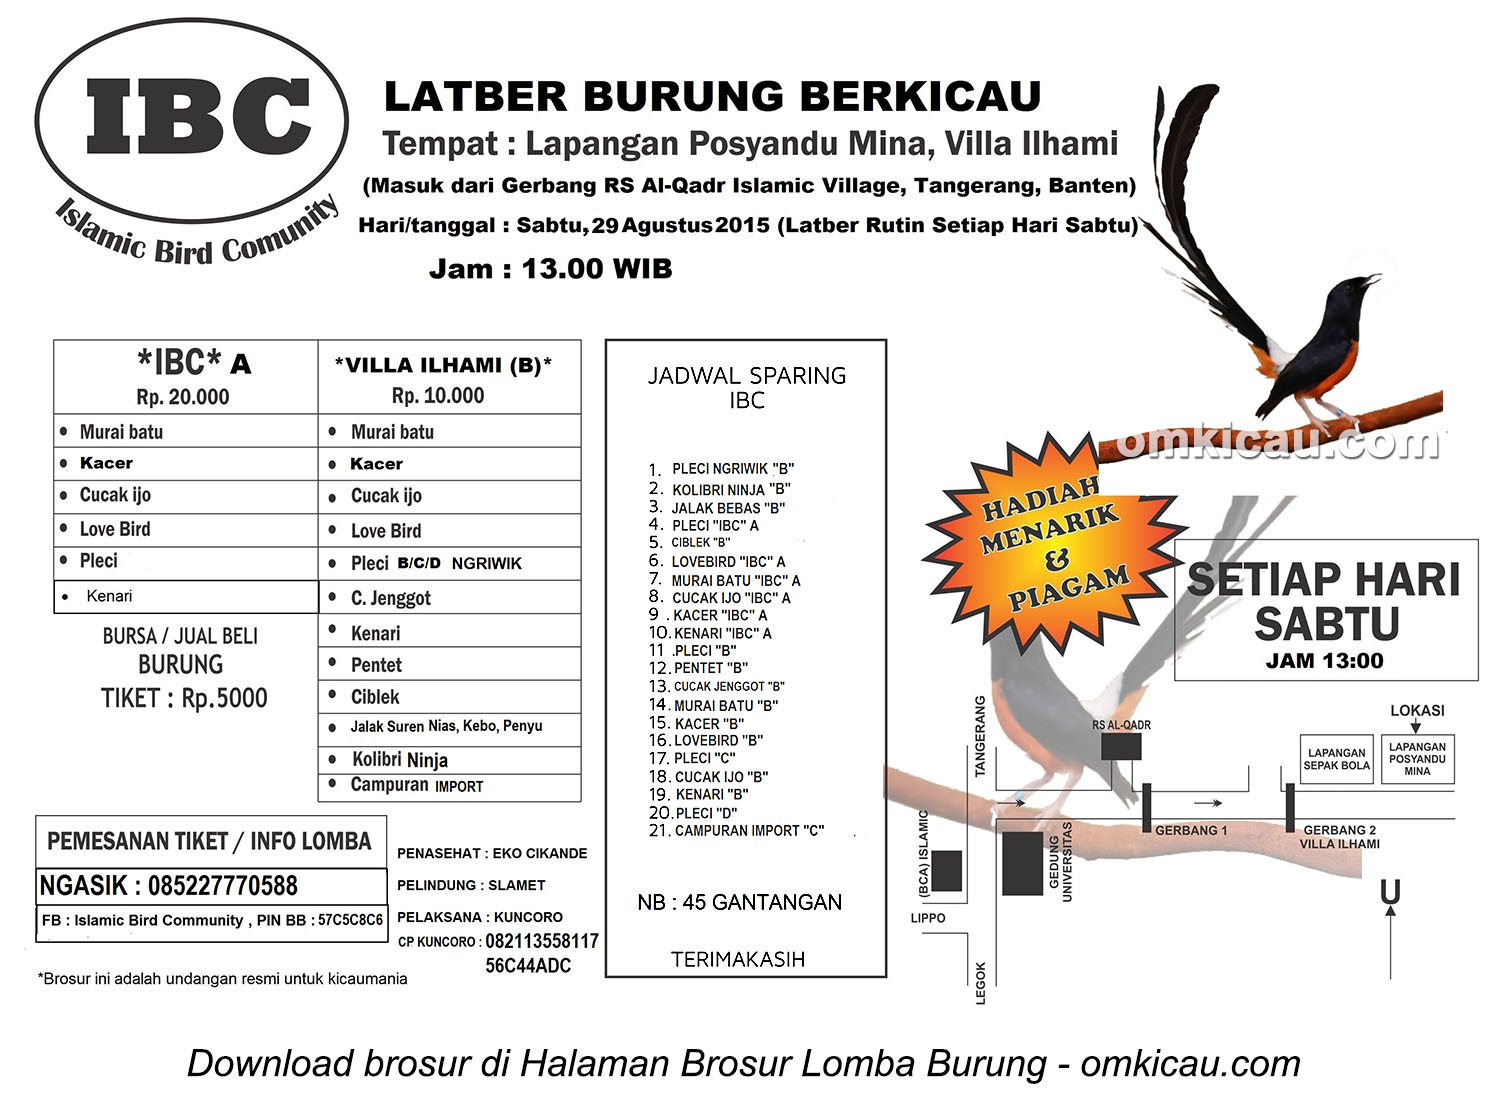 Brosur Latber Burung Berkicau IBC Tangerang, Sabtu 29 Agustus 2015